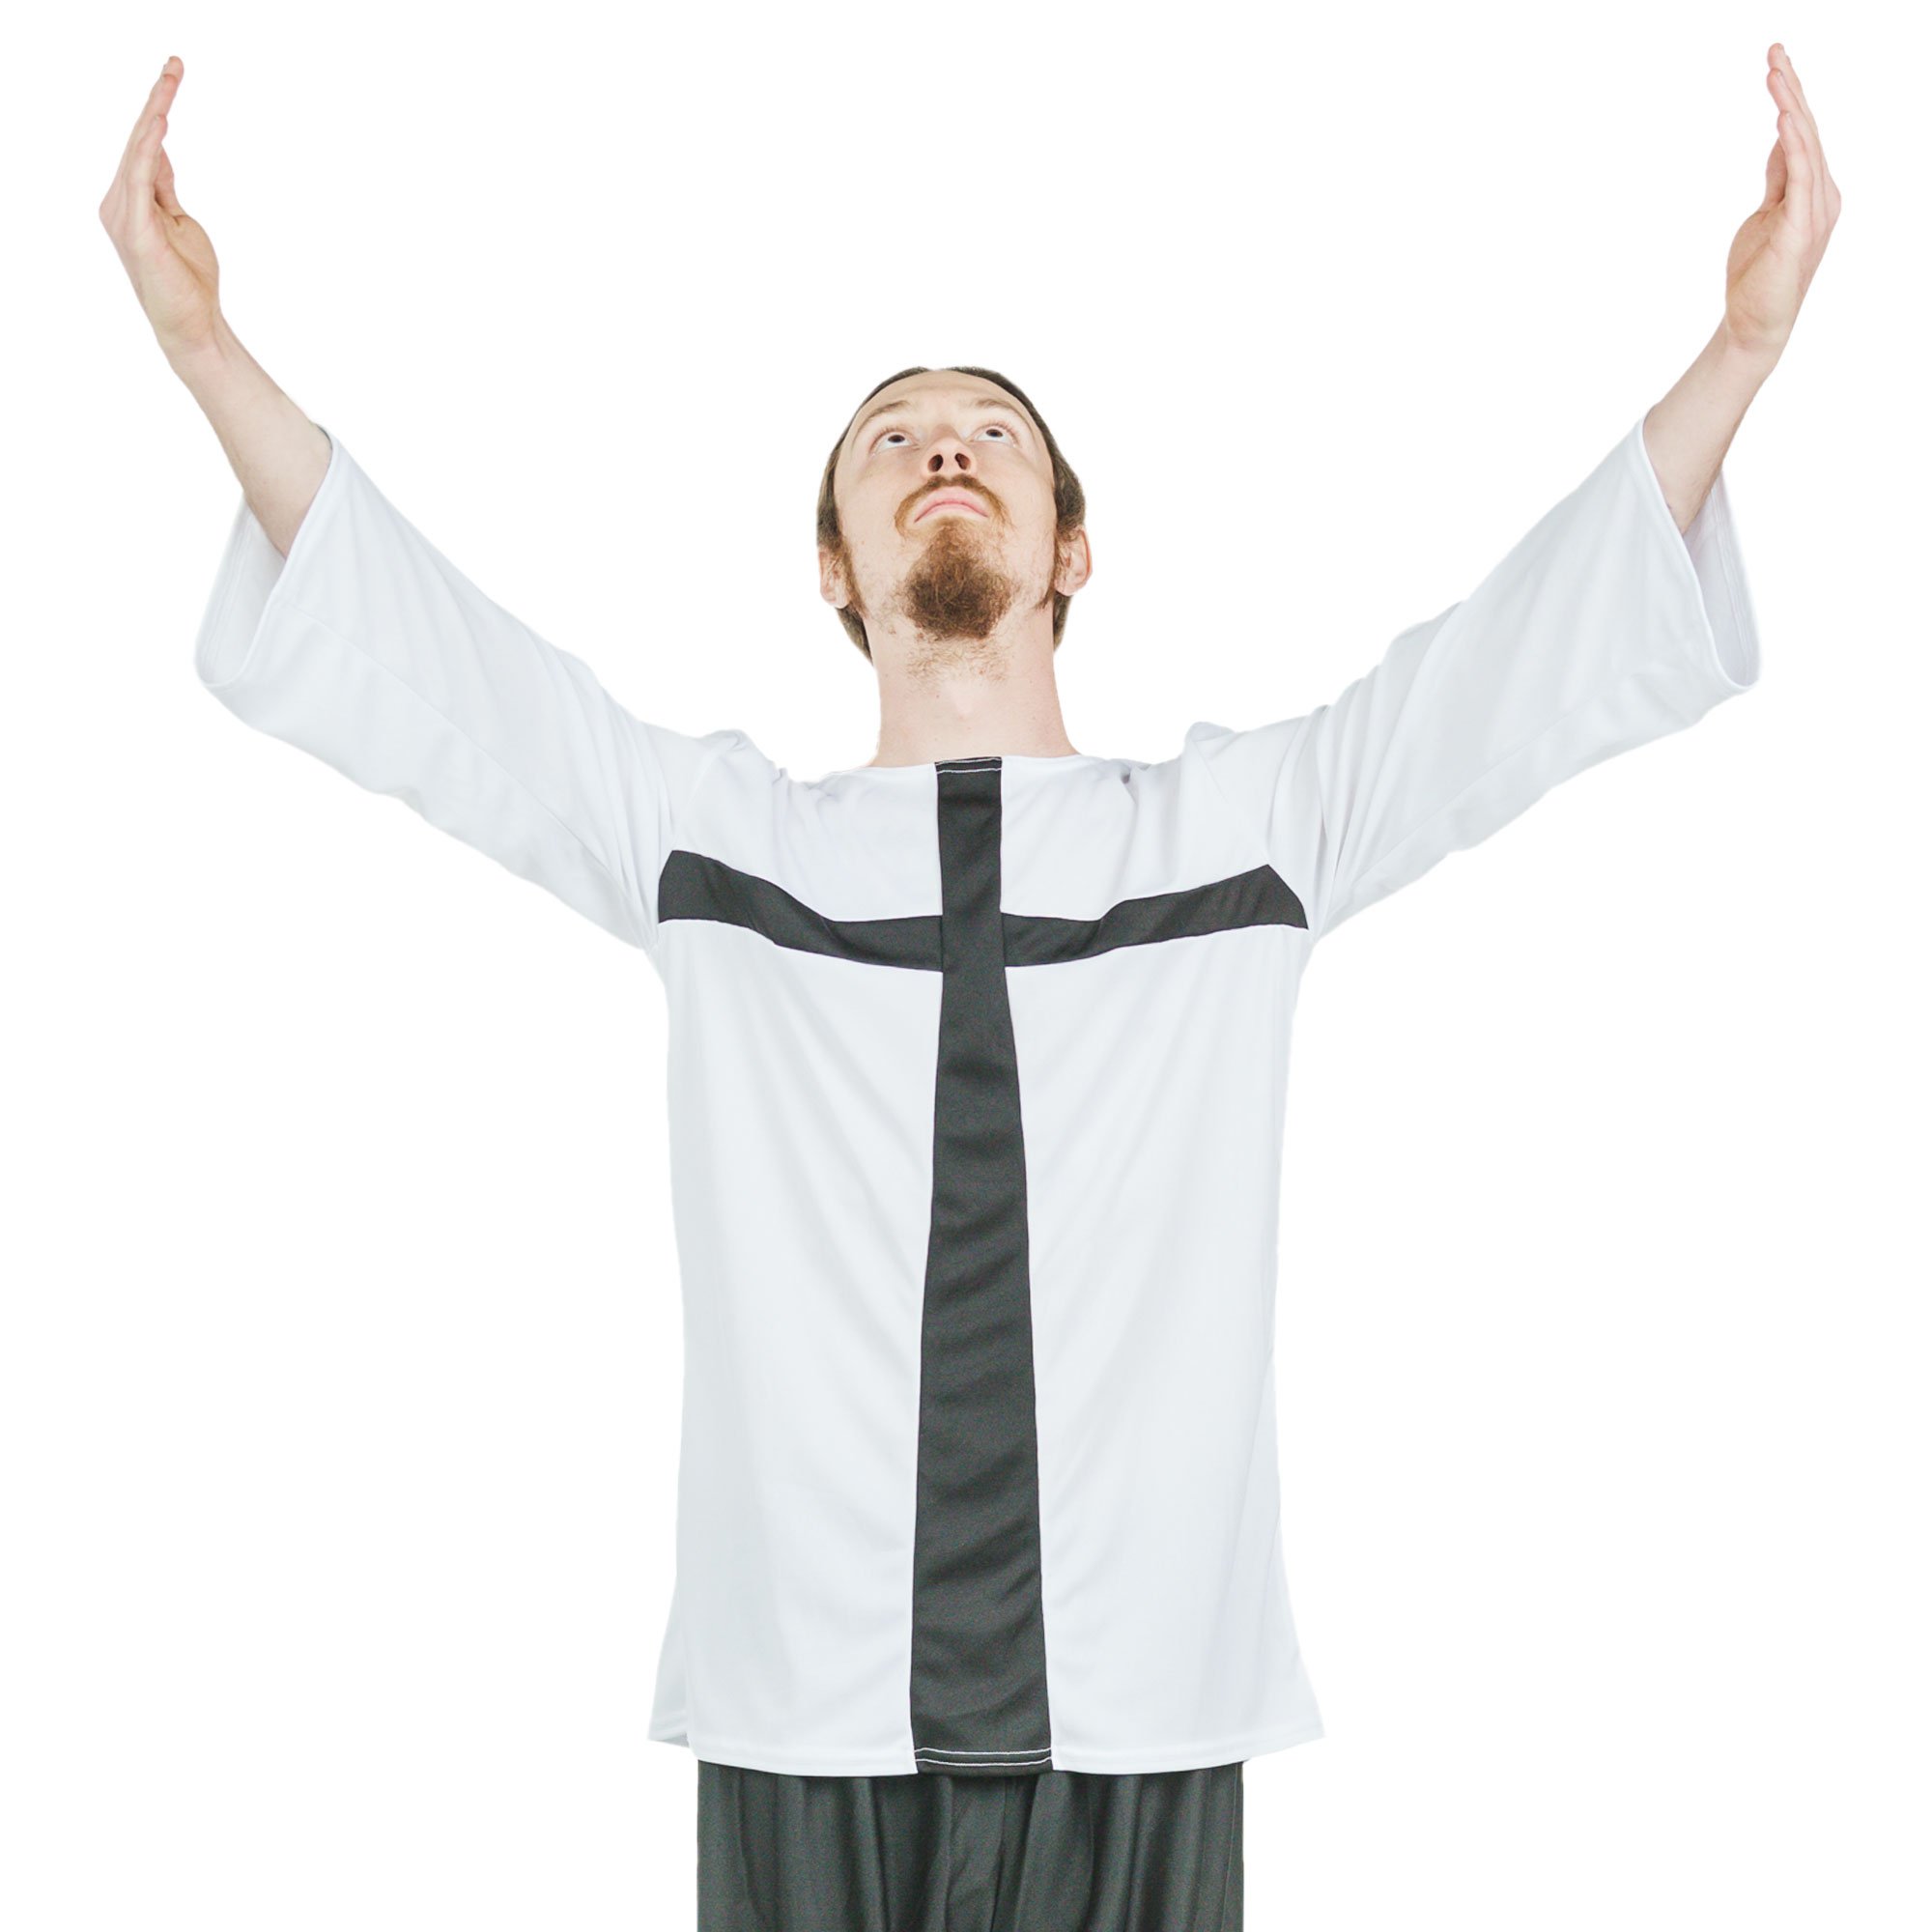 Danzcue Praise Cross Inspired Tunic - Click Image to Close